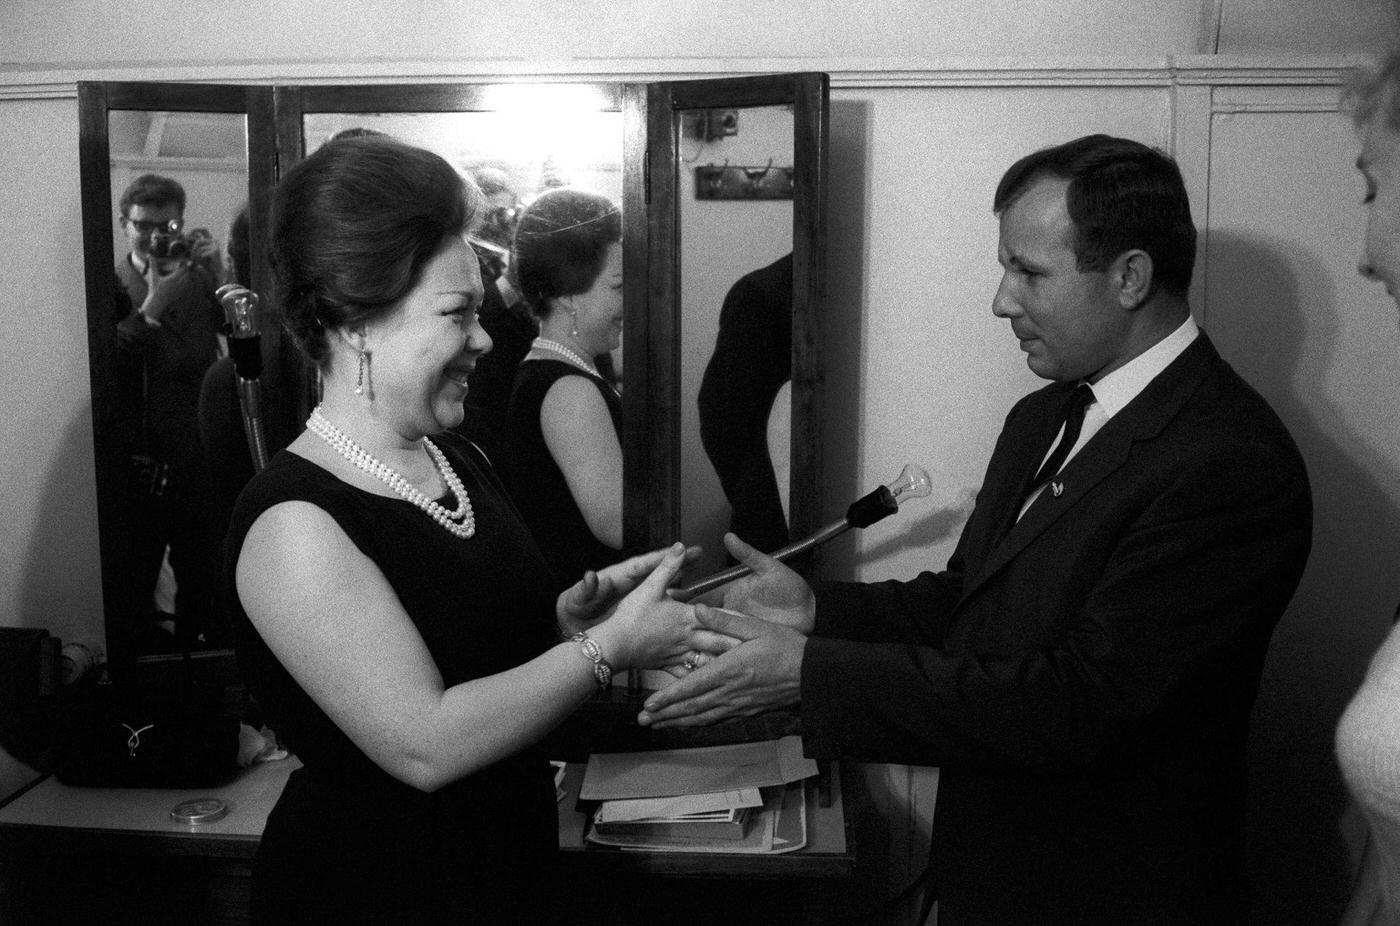 Soviet astronaut Yuri Gagarin congratulating Italian soprano Renata Scotto, who performed in 'Turandot' at the Bolshoi Theatre in Moscow, 1964